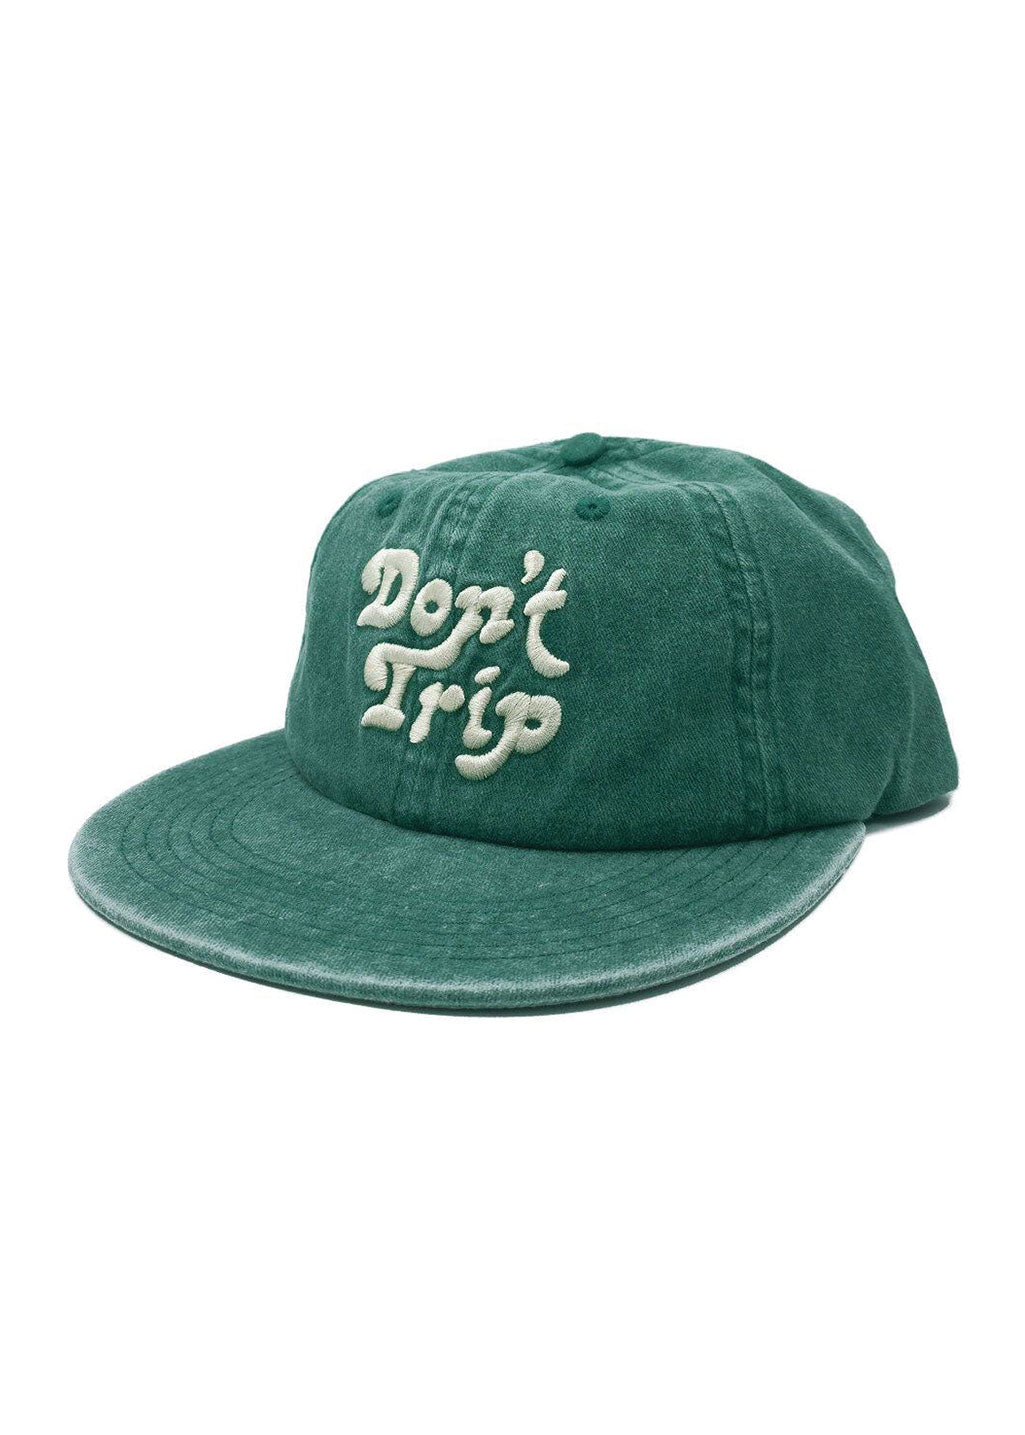 Free & Easy - Don't Trip Washed Hat - Green - Hardpressed Print Studio Inc.